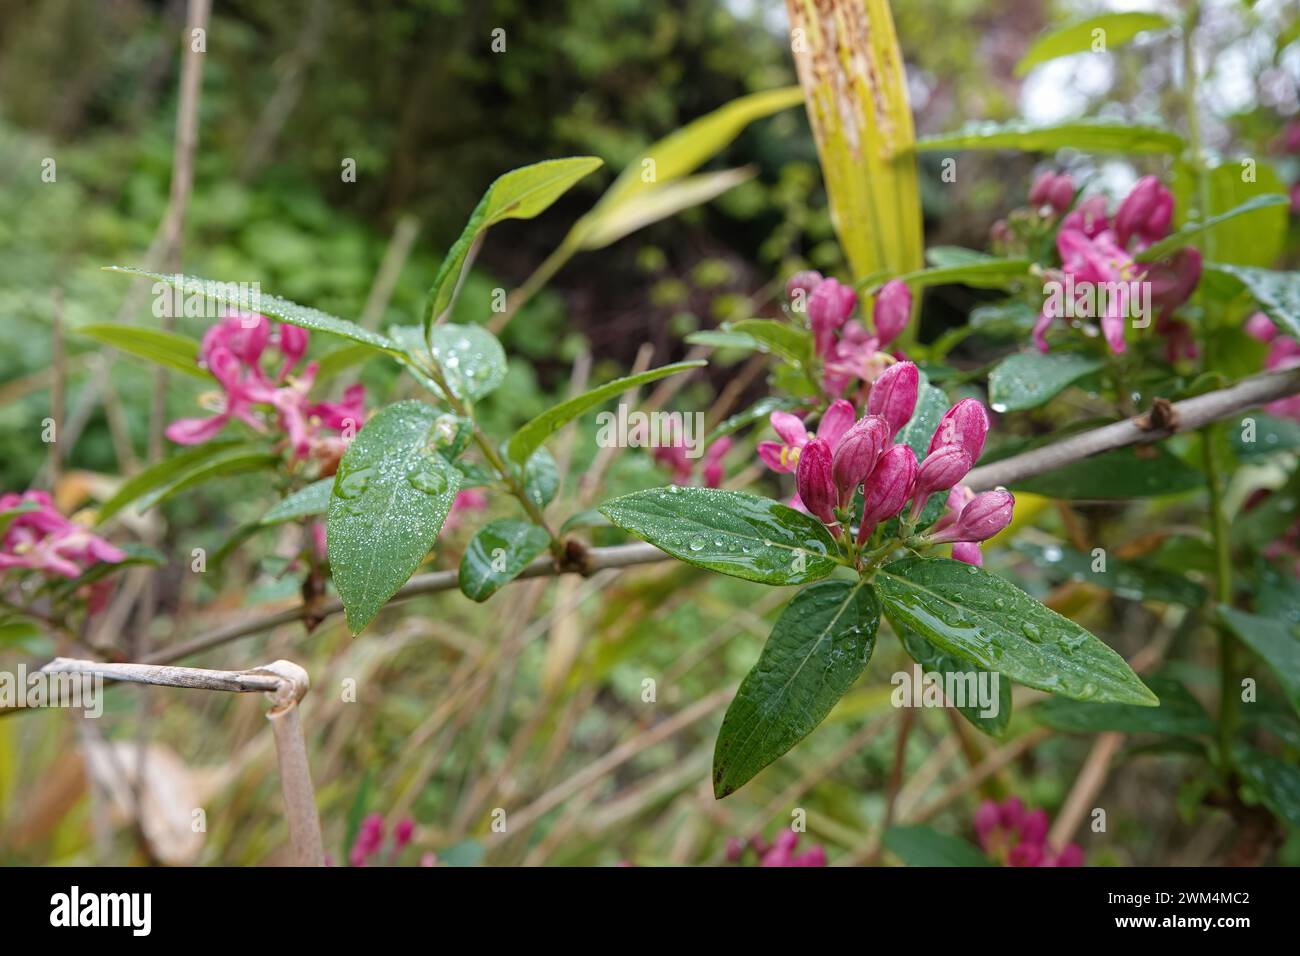 Natural closeup on the emerging red flowers of the Tatarian honeysuckle shrub, Lonicera tatarica Stock Photo